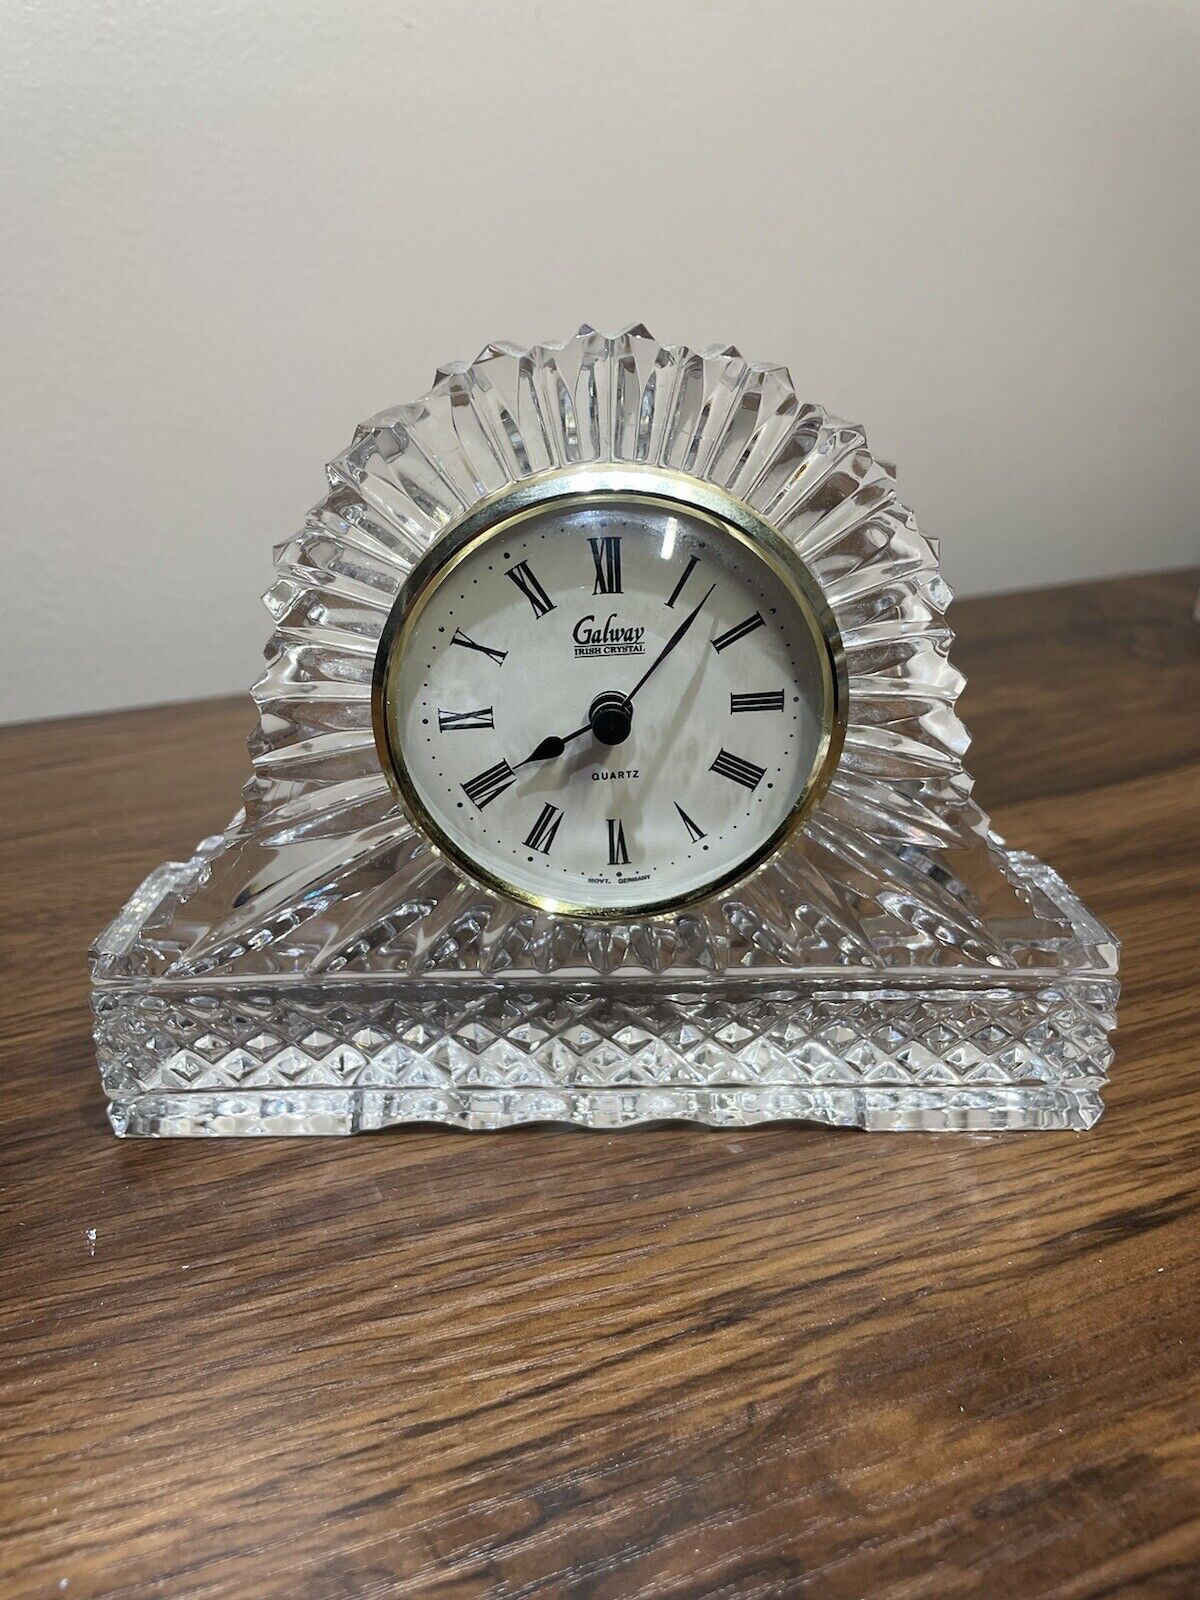 Galway Irish Crystal Made in Ireland Desk Clock Works